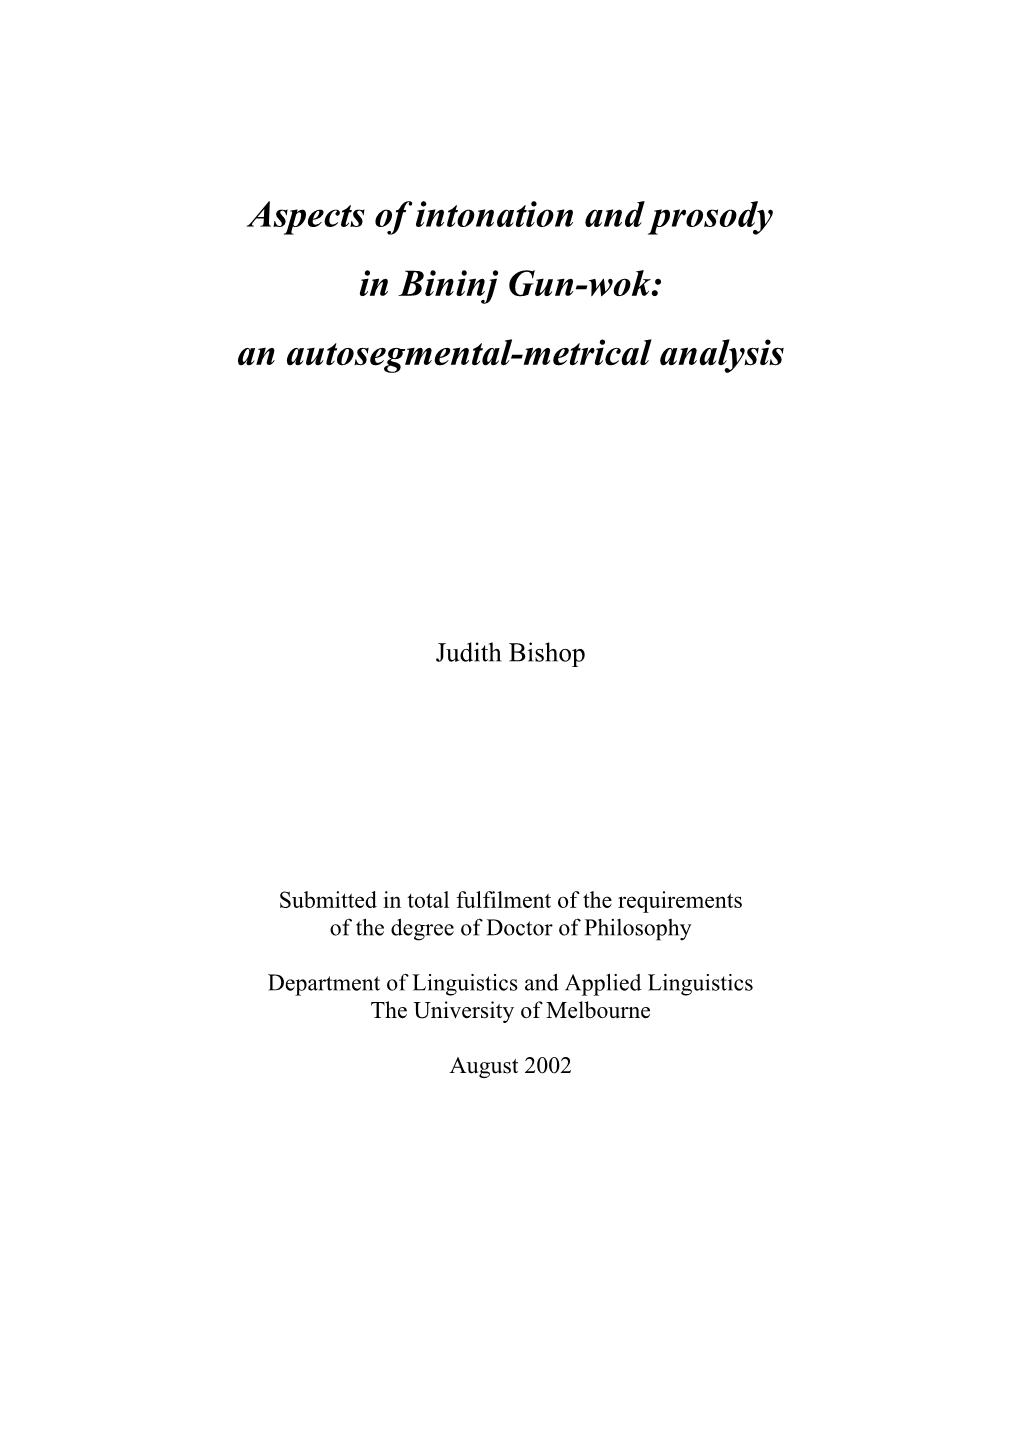 Aspects of Intonation and Prosody in Bininj Gun-Wok: an Autosegmental-Metrical Analysis